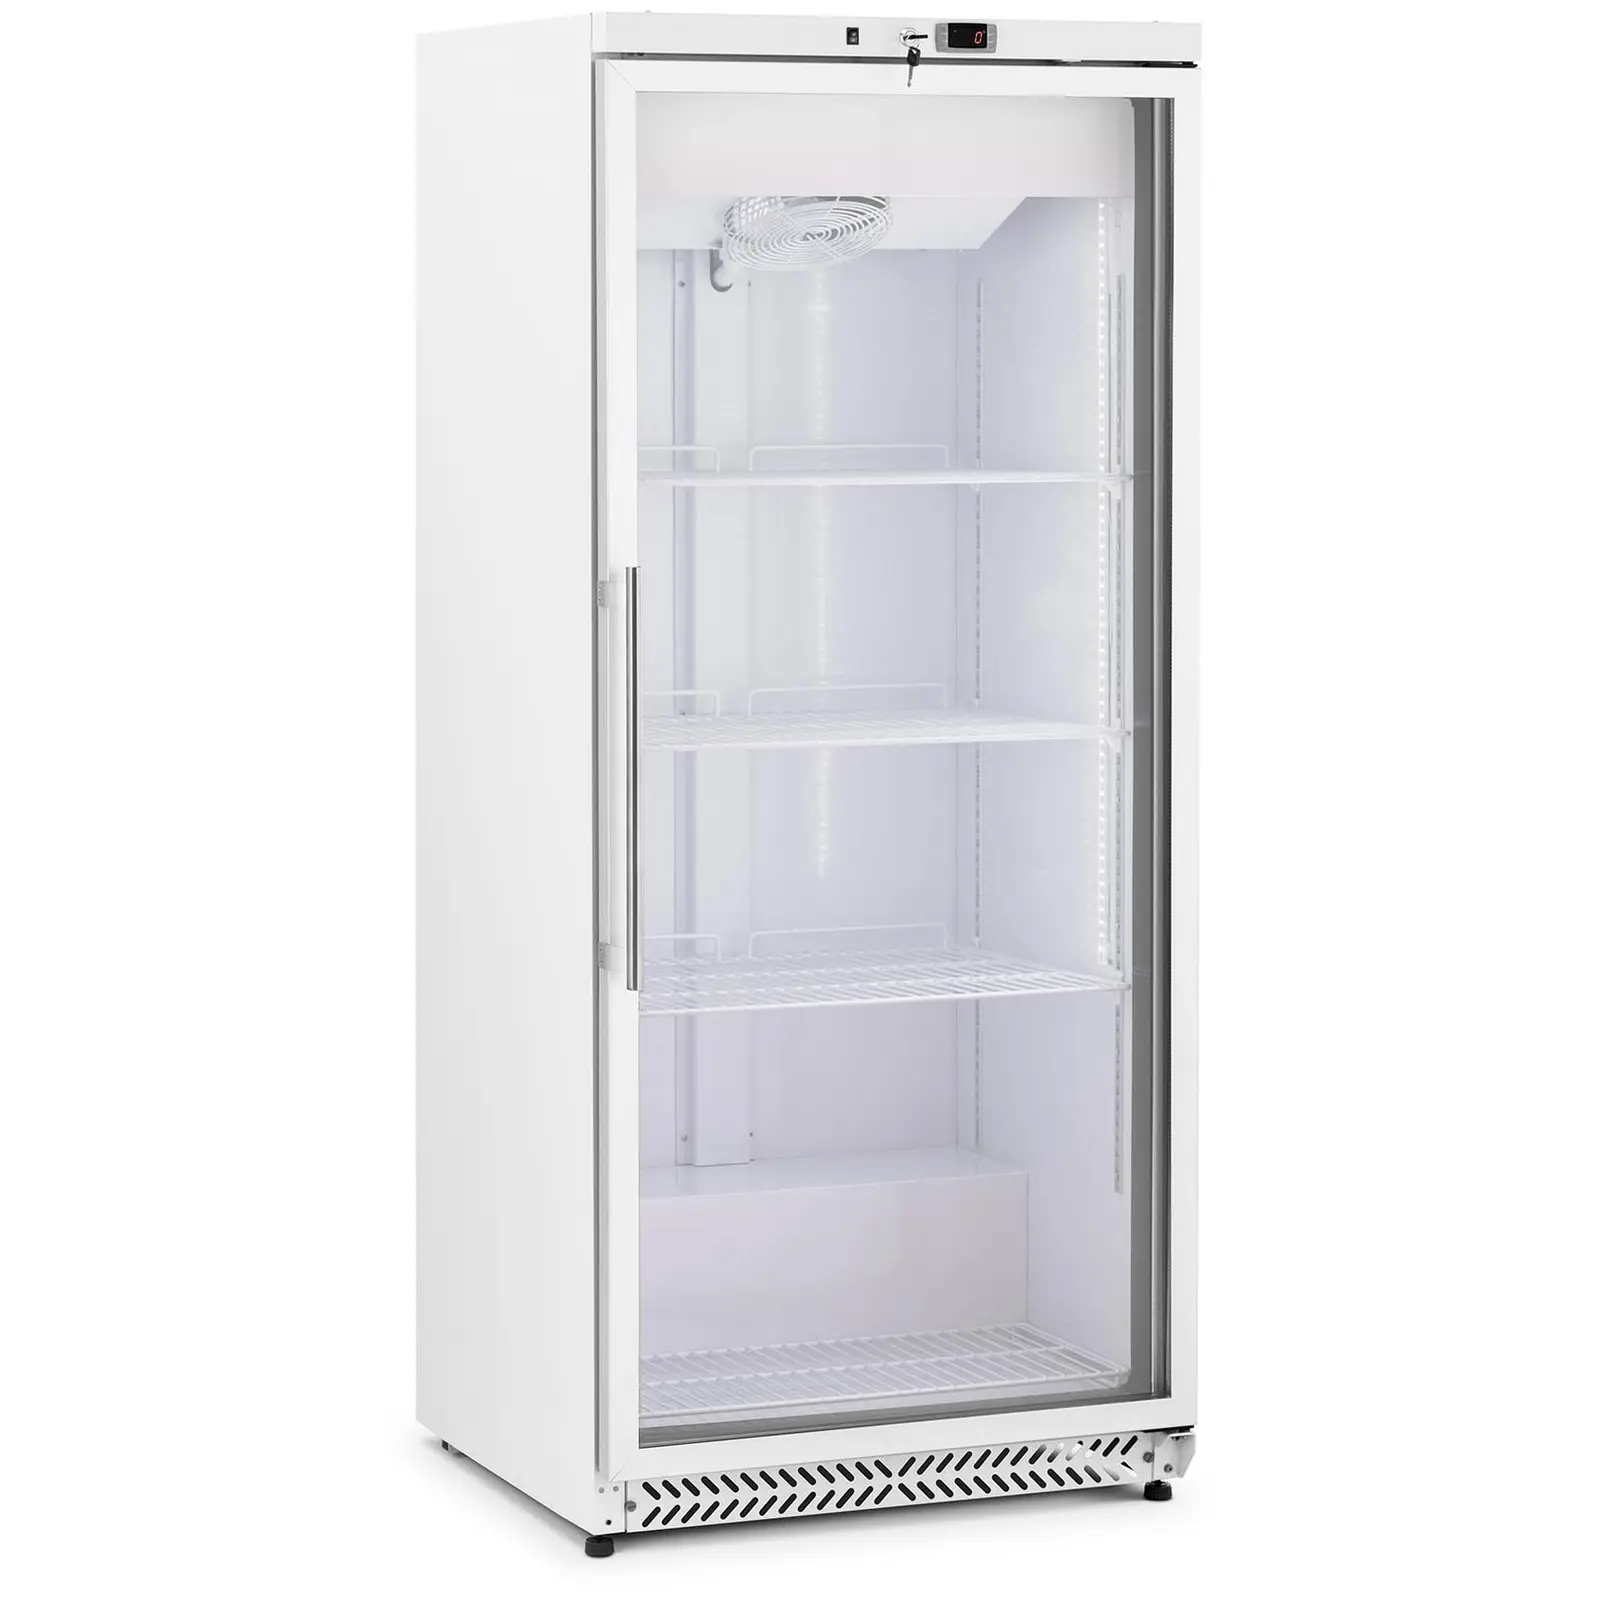 Gastro-Kühlschrank – 590 L – Royal Catering – mit Glastür RCLK-C590GB